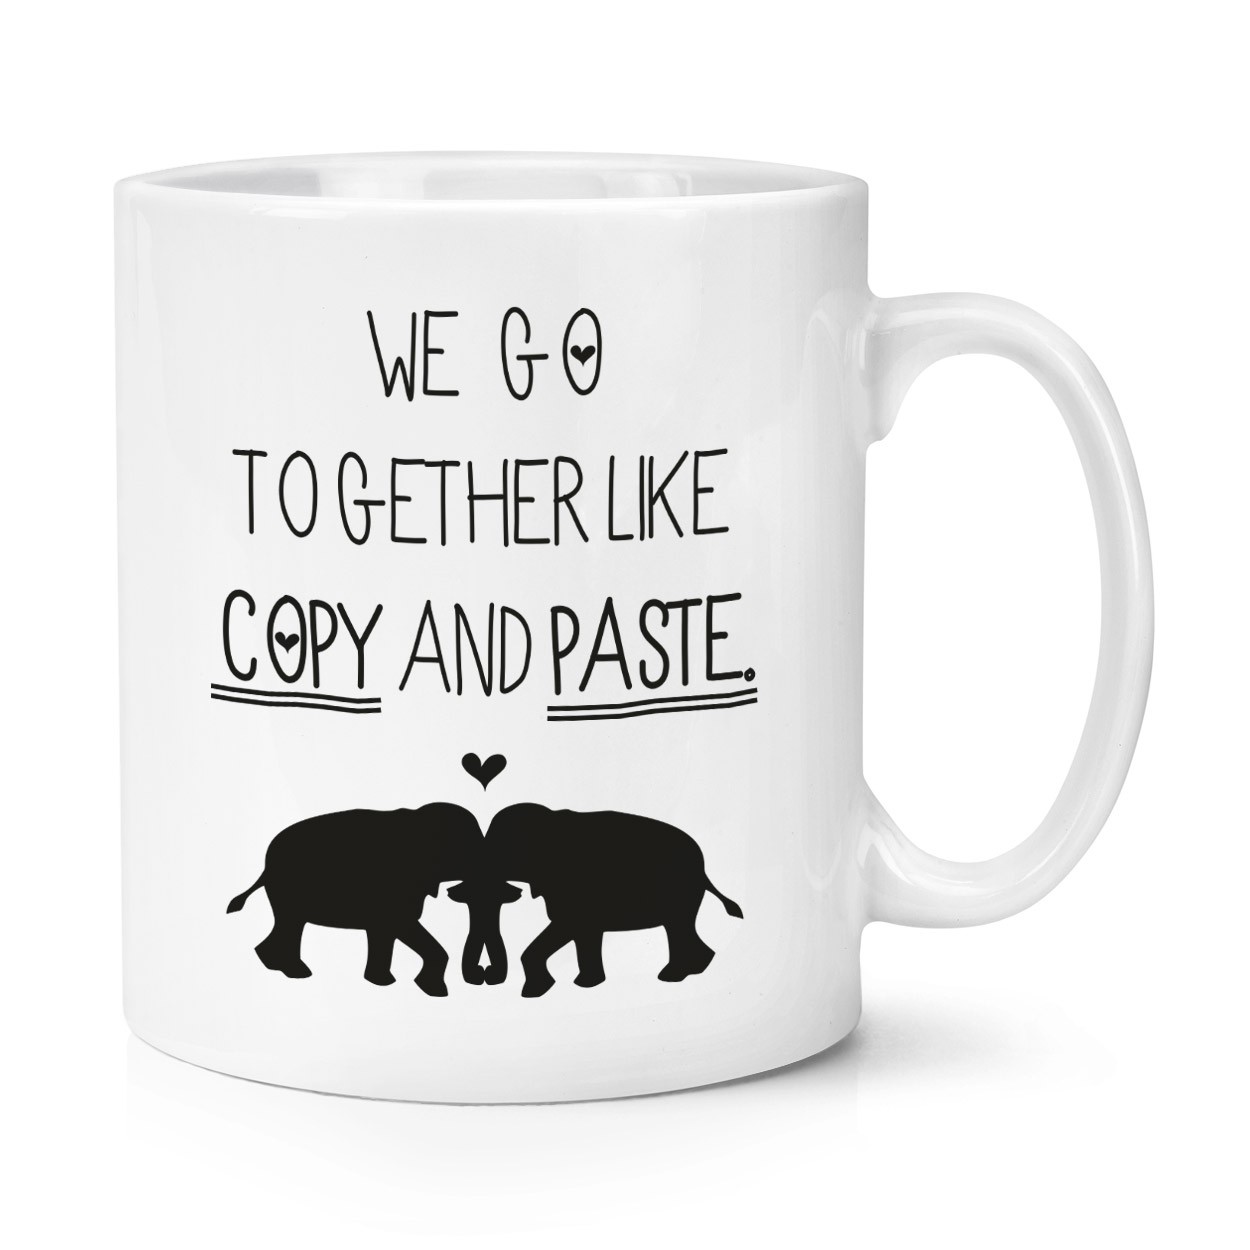 We Go Together Like Copy And Paste 10oz Mug Cup